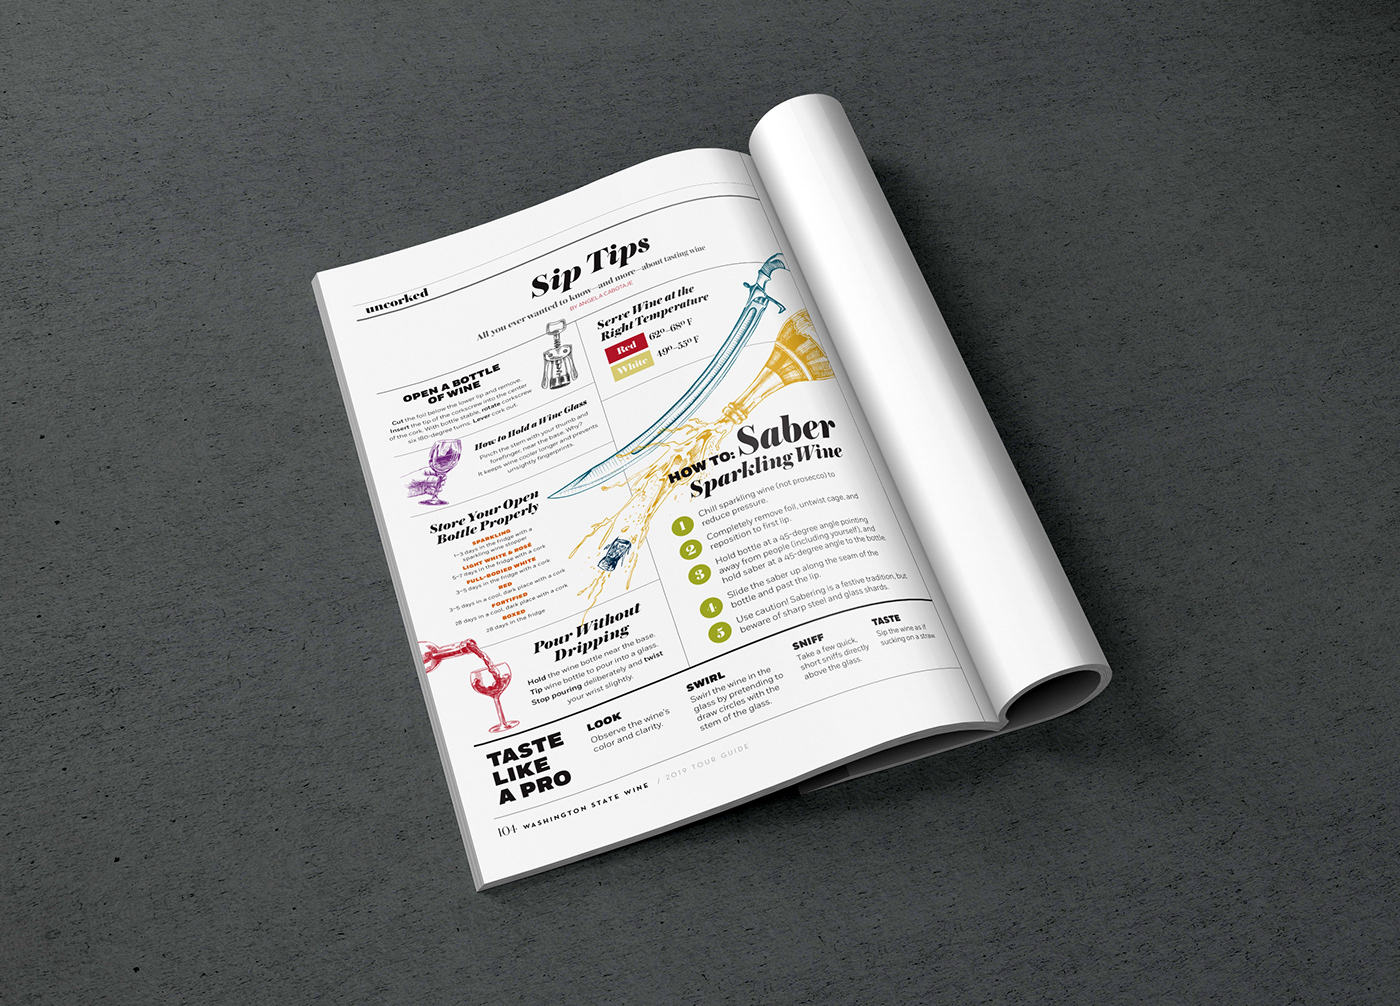 editorial editorial design  Layout wine print design  graphic design  magazine guides